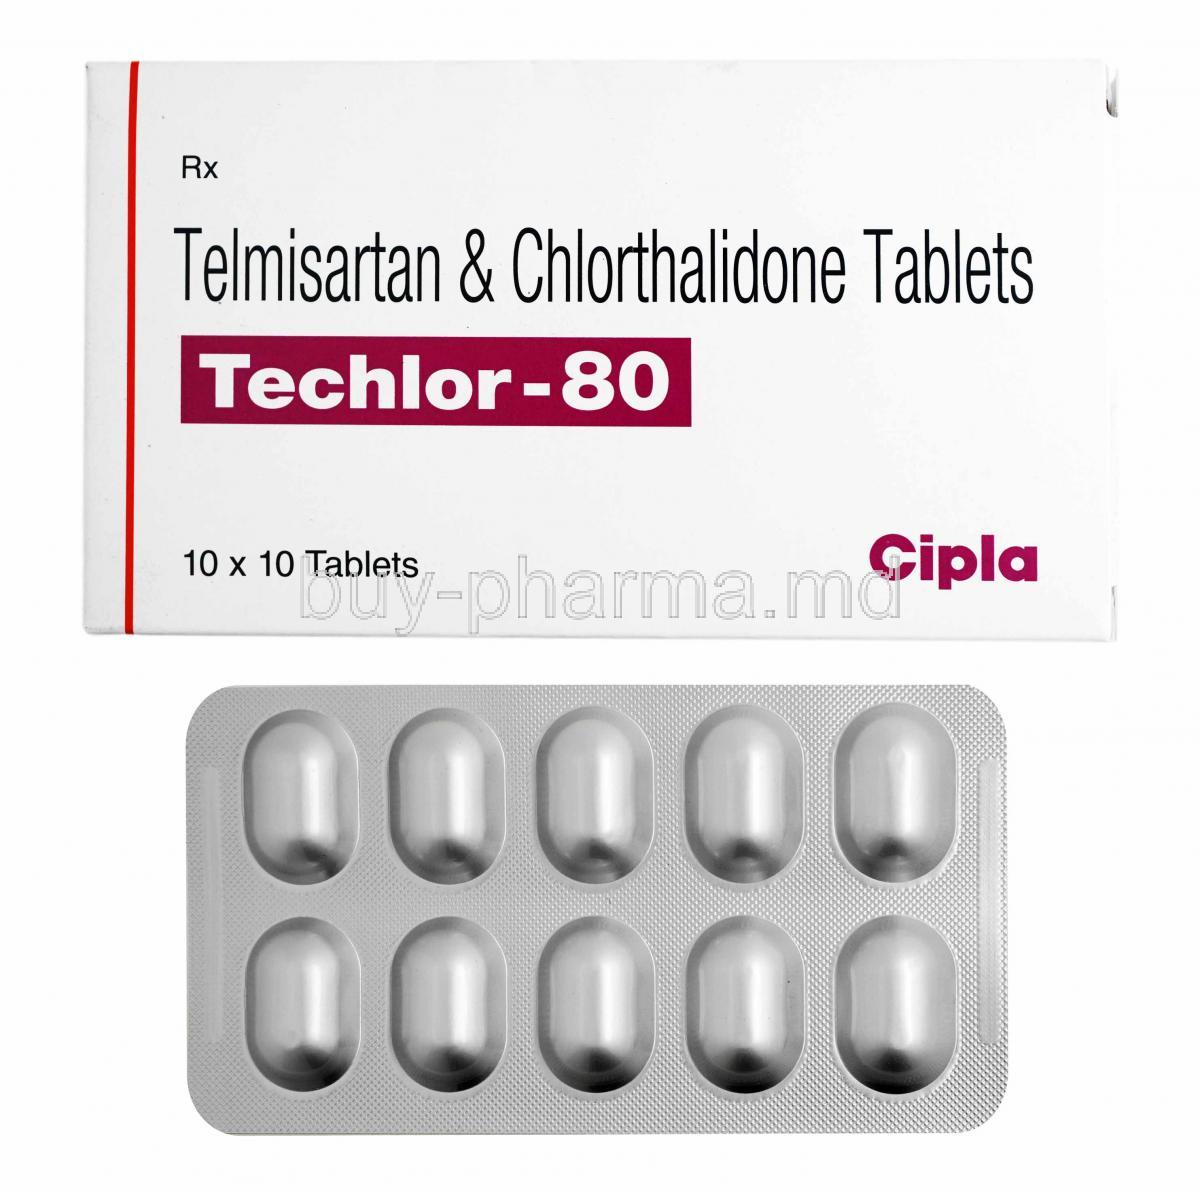 Techlor, Telmisartan 80mg and Chlorthalidone 12.5mg box and tablets